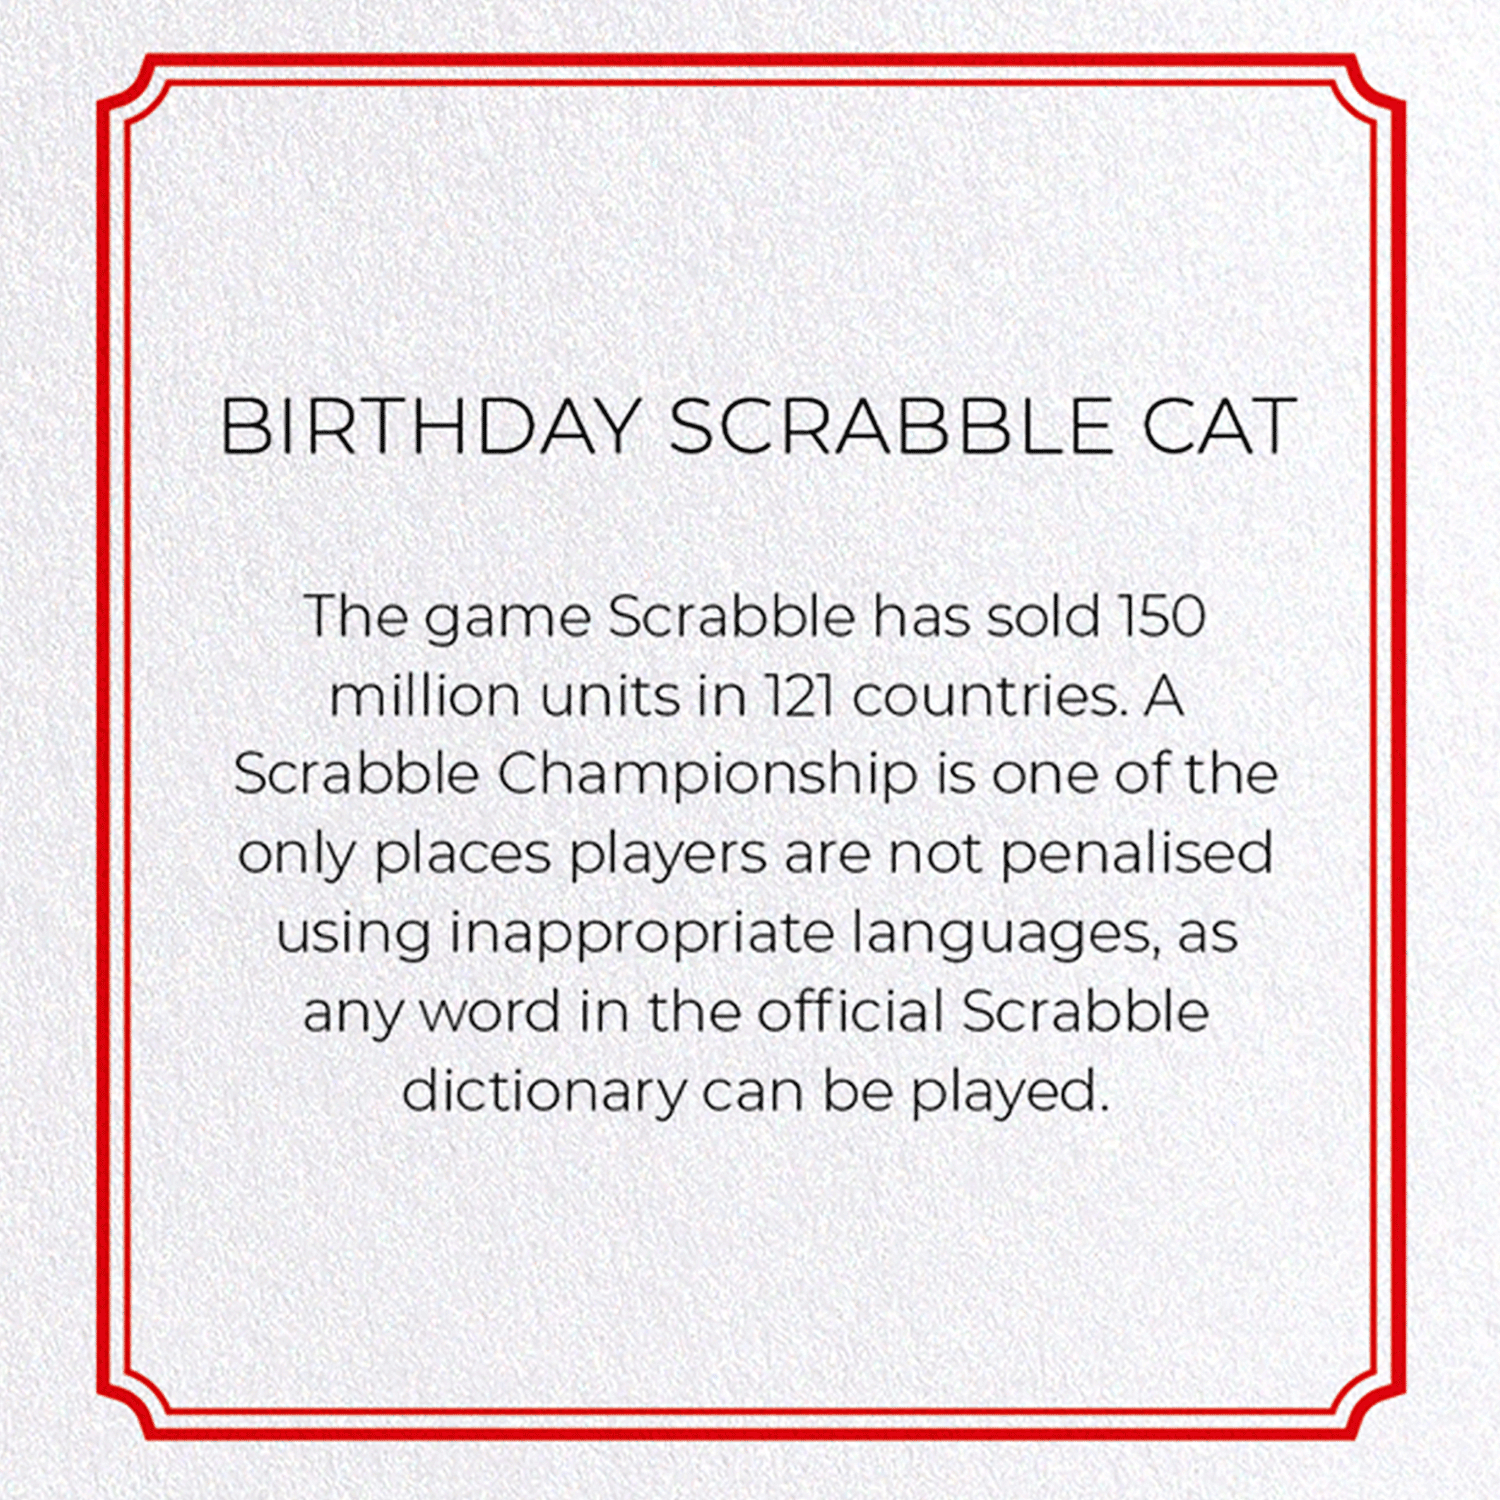 BIRTHDAY SCRABBLE CAT